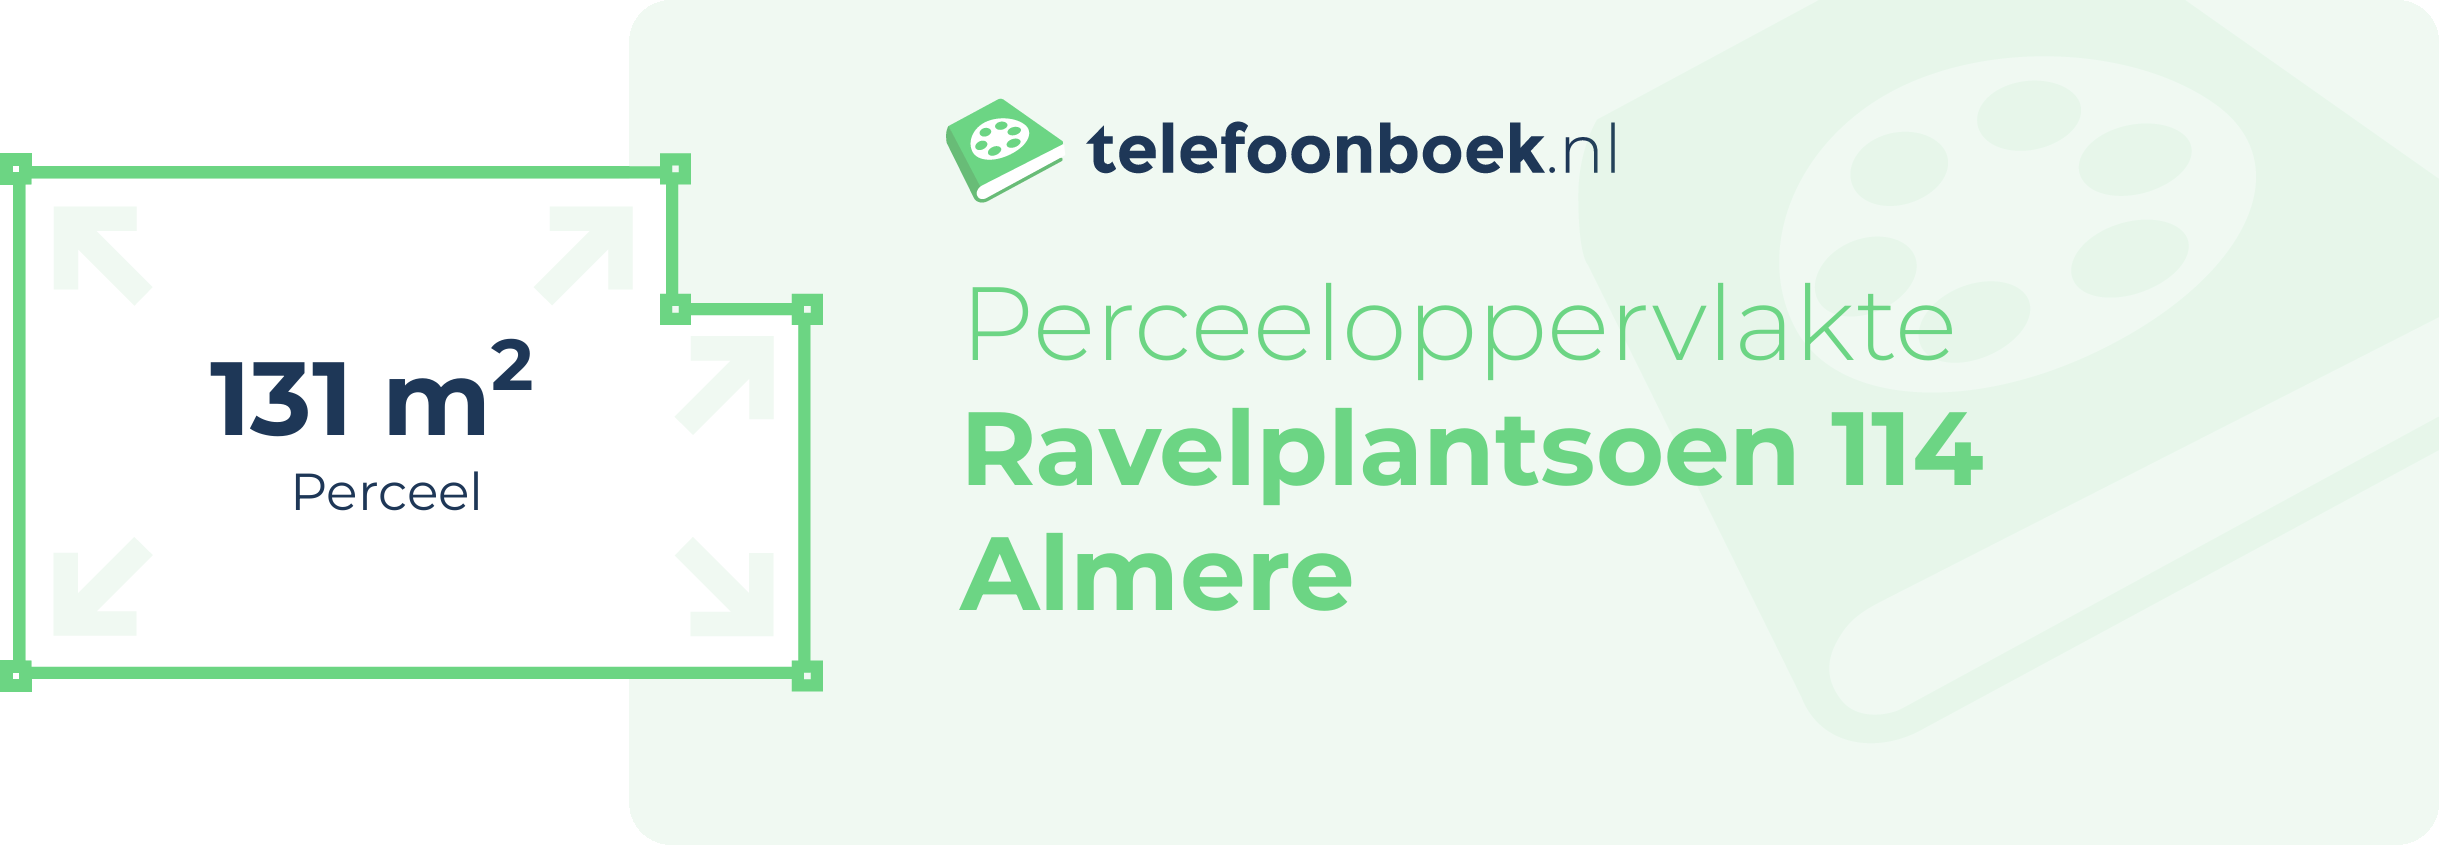 Perceeloppervlakte Ravelplantsoen 114 Almere